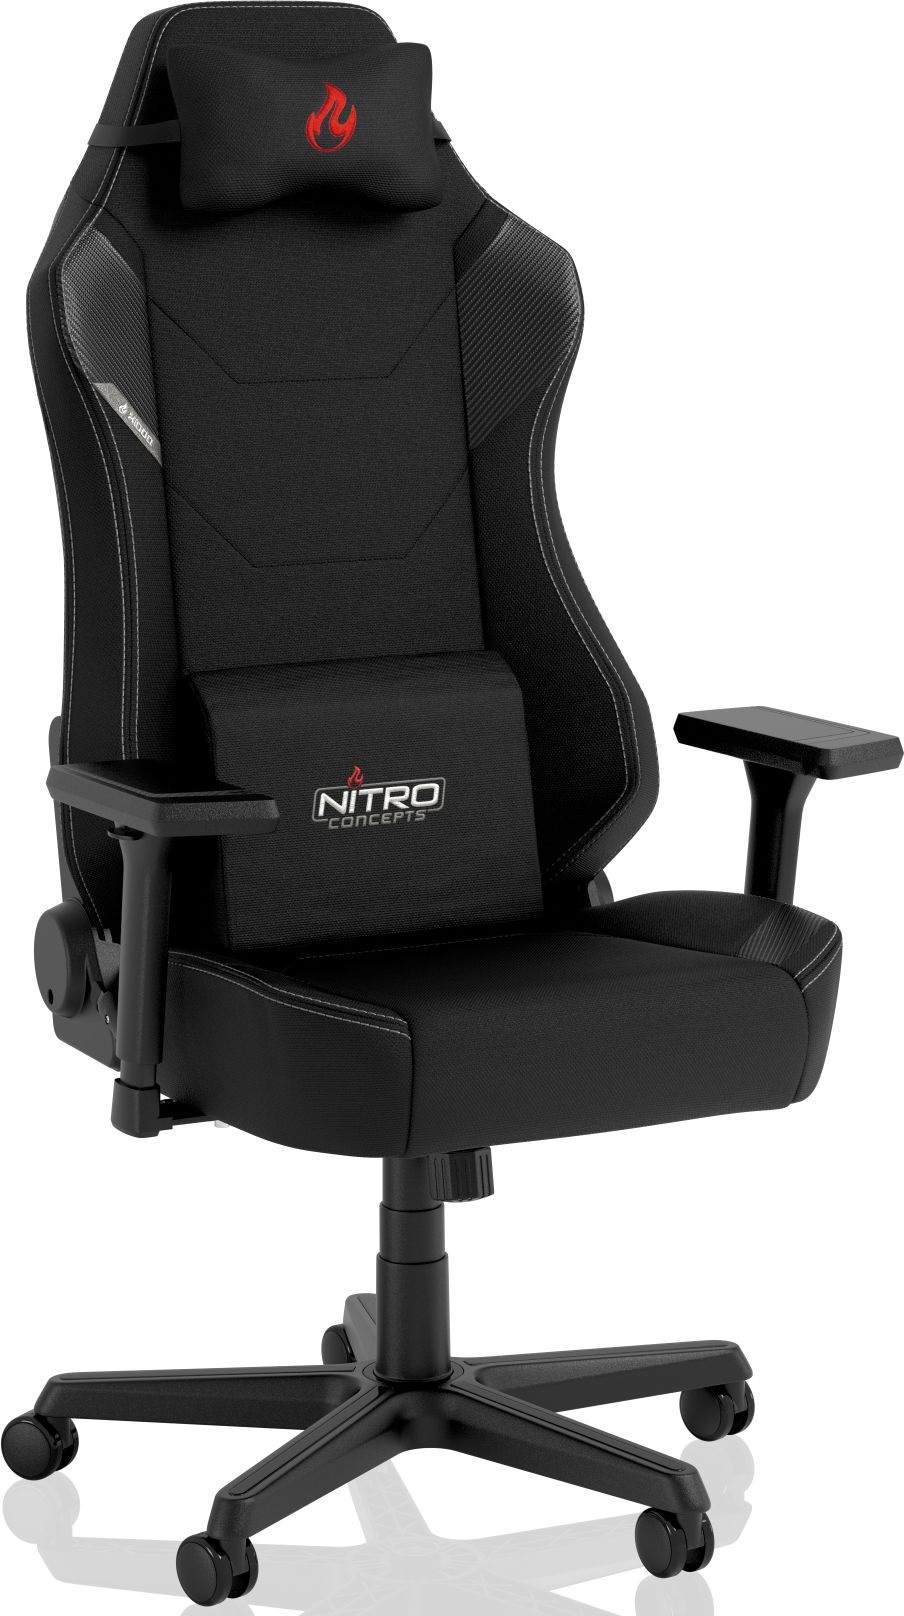 Nitro Concepts X1000 Gaming Chairs - black - Thali